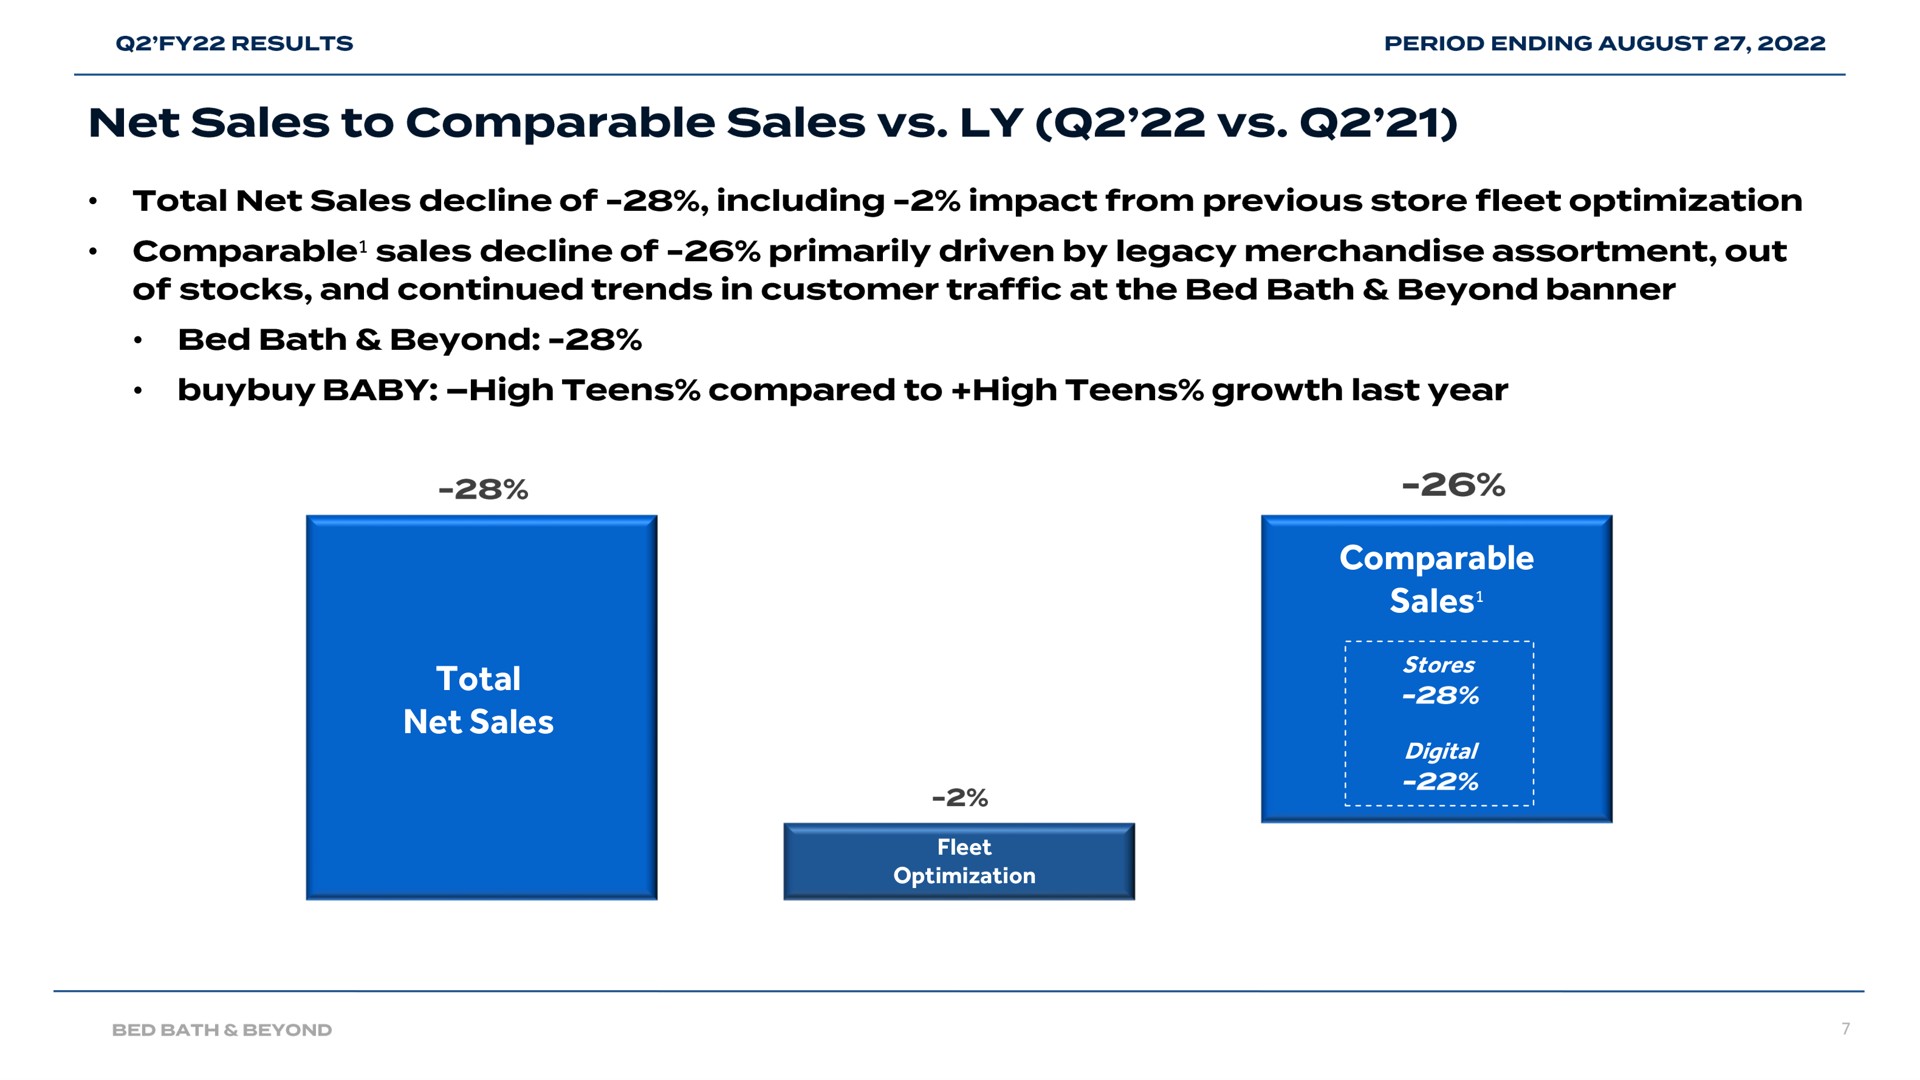 total net sales fleet optimization fleet optimization comparable comparable sales sales stores digital to | Bed Bath & Beyond